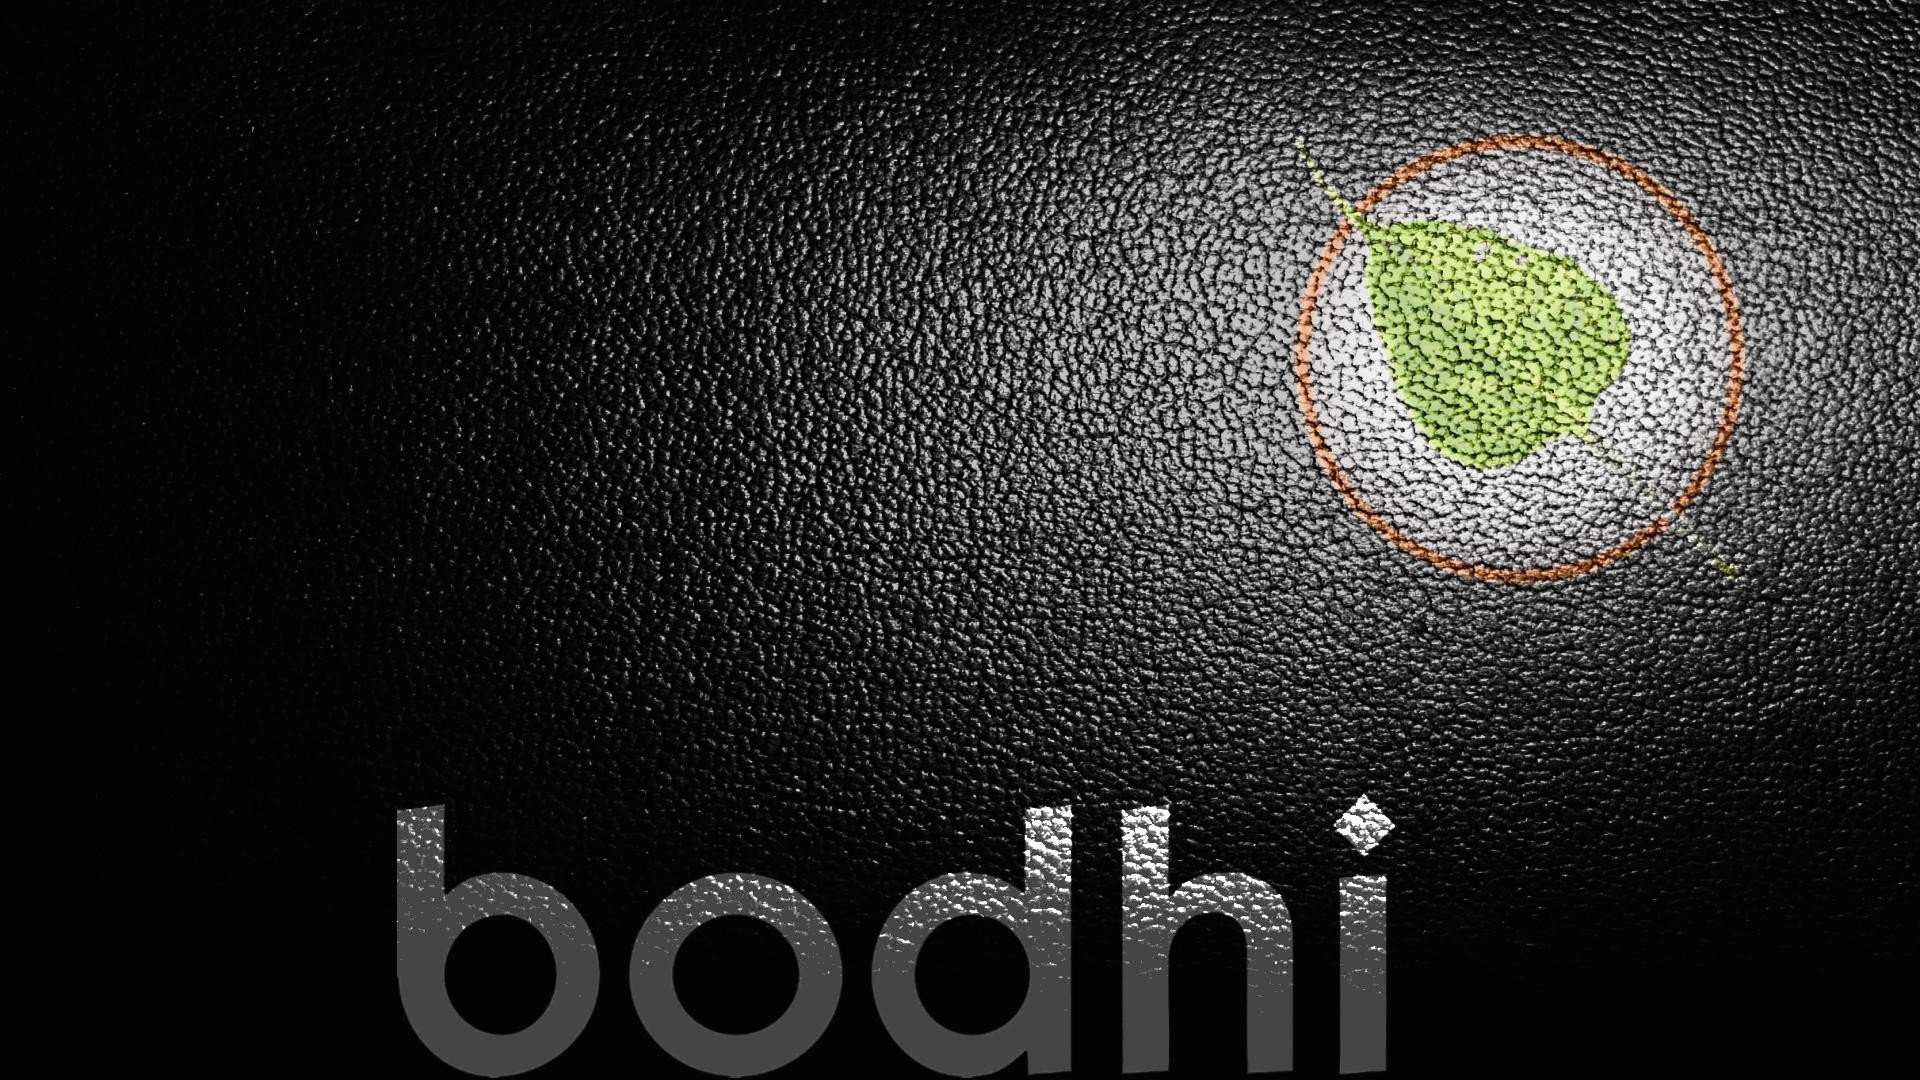 text, Linux, textures, Bodhi Linux Wallpaper / WallpaperJam.com